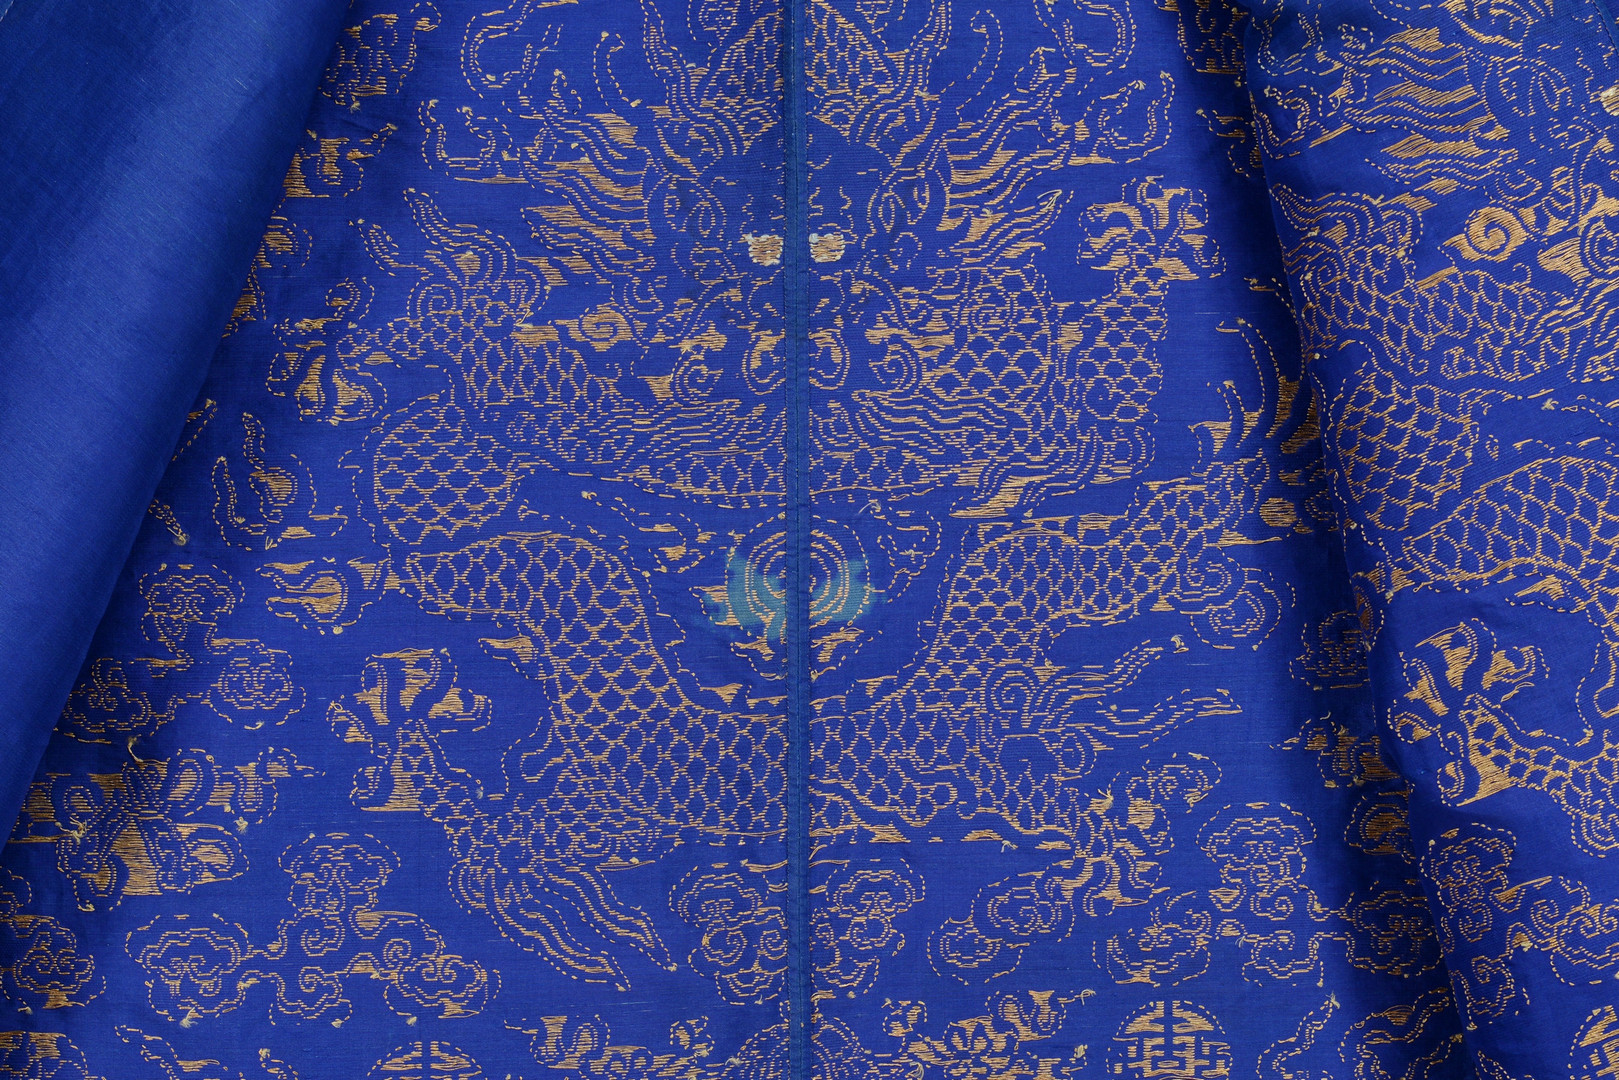 Lot 18: Qing Dynasty Nine Dragon Robe